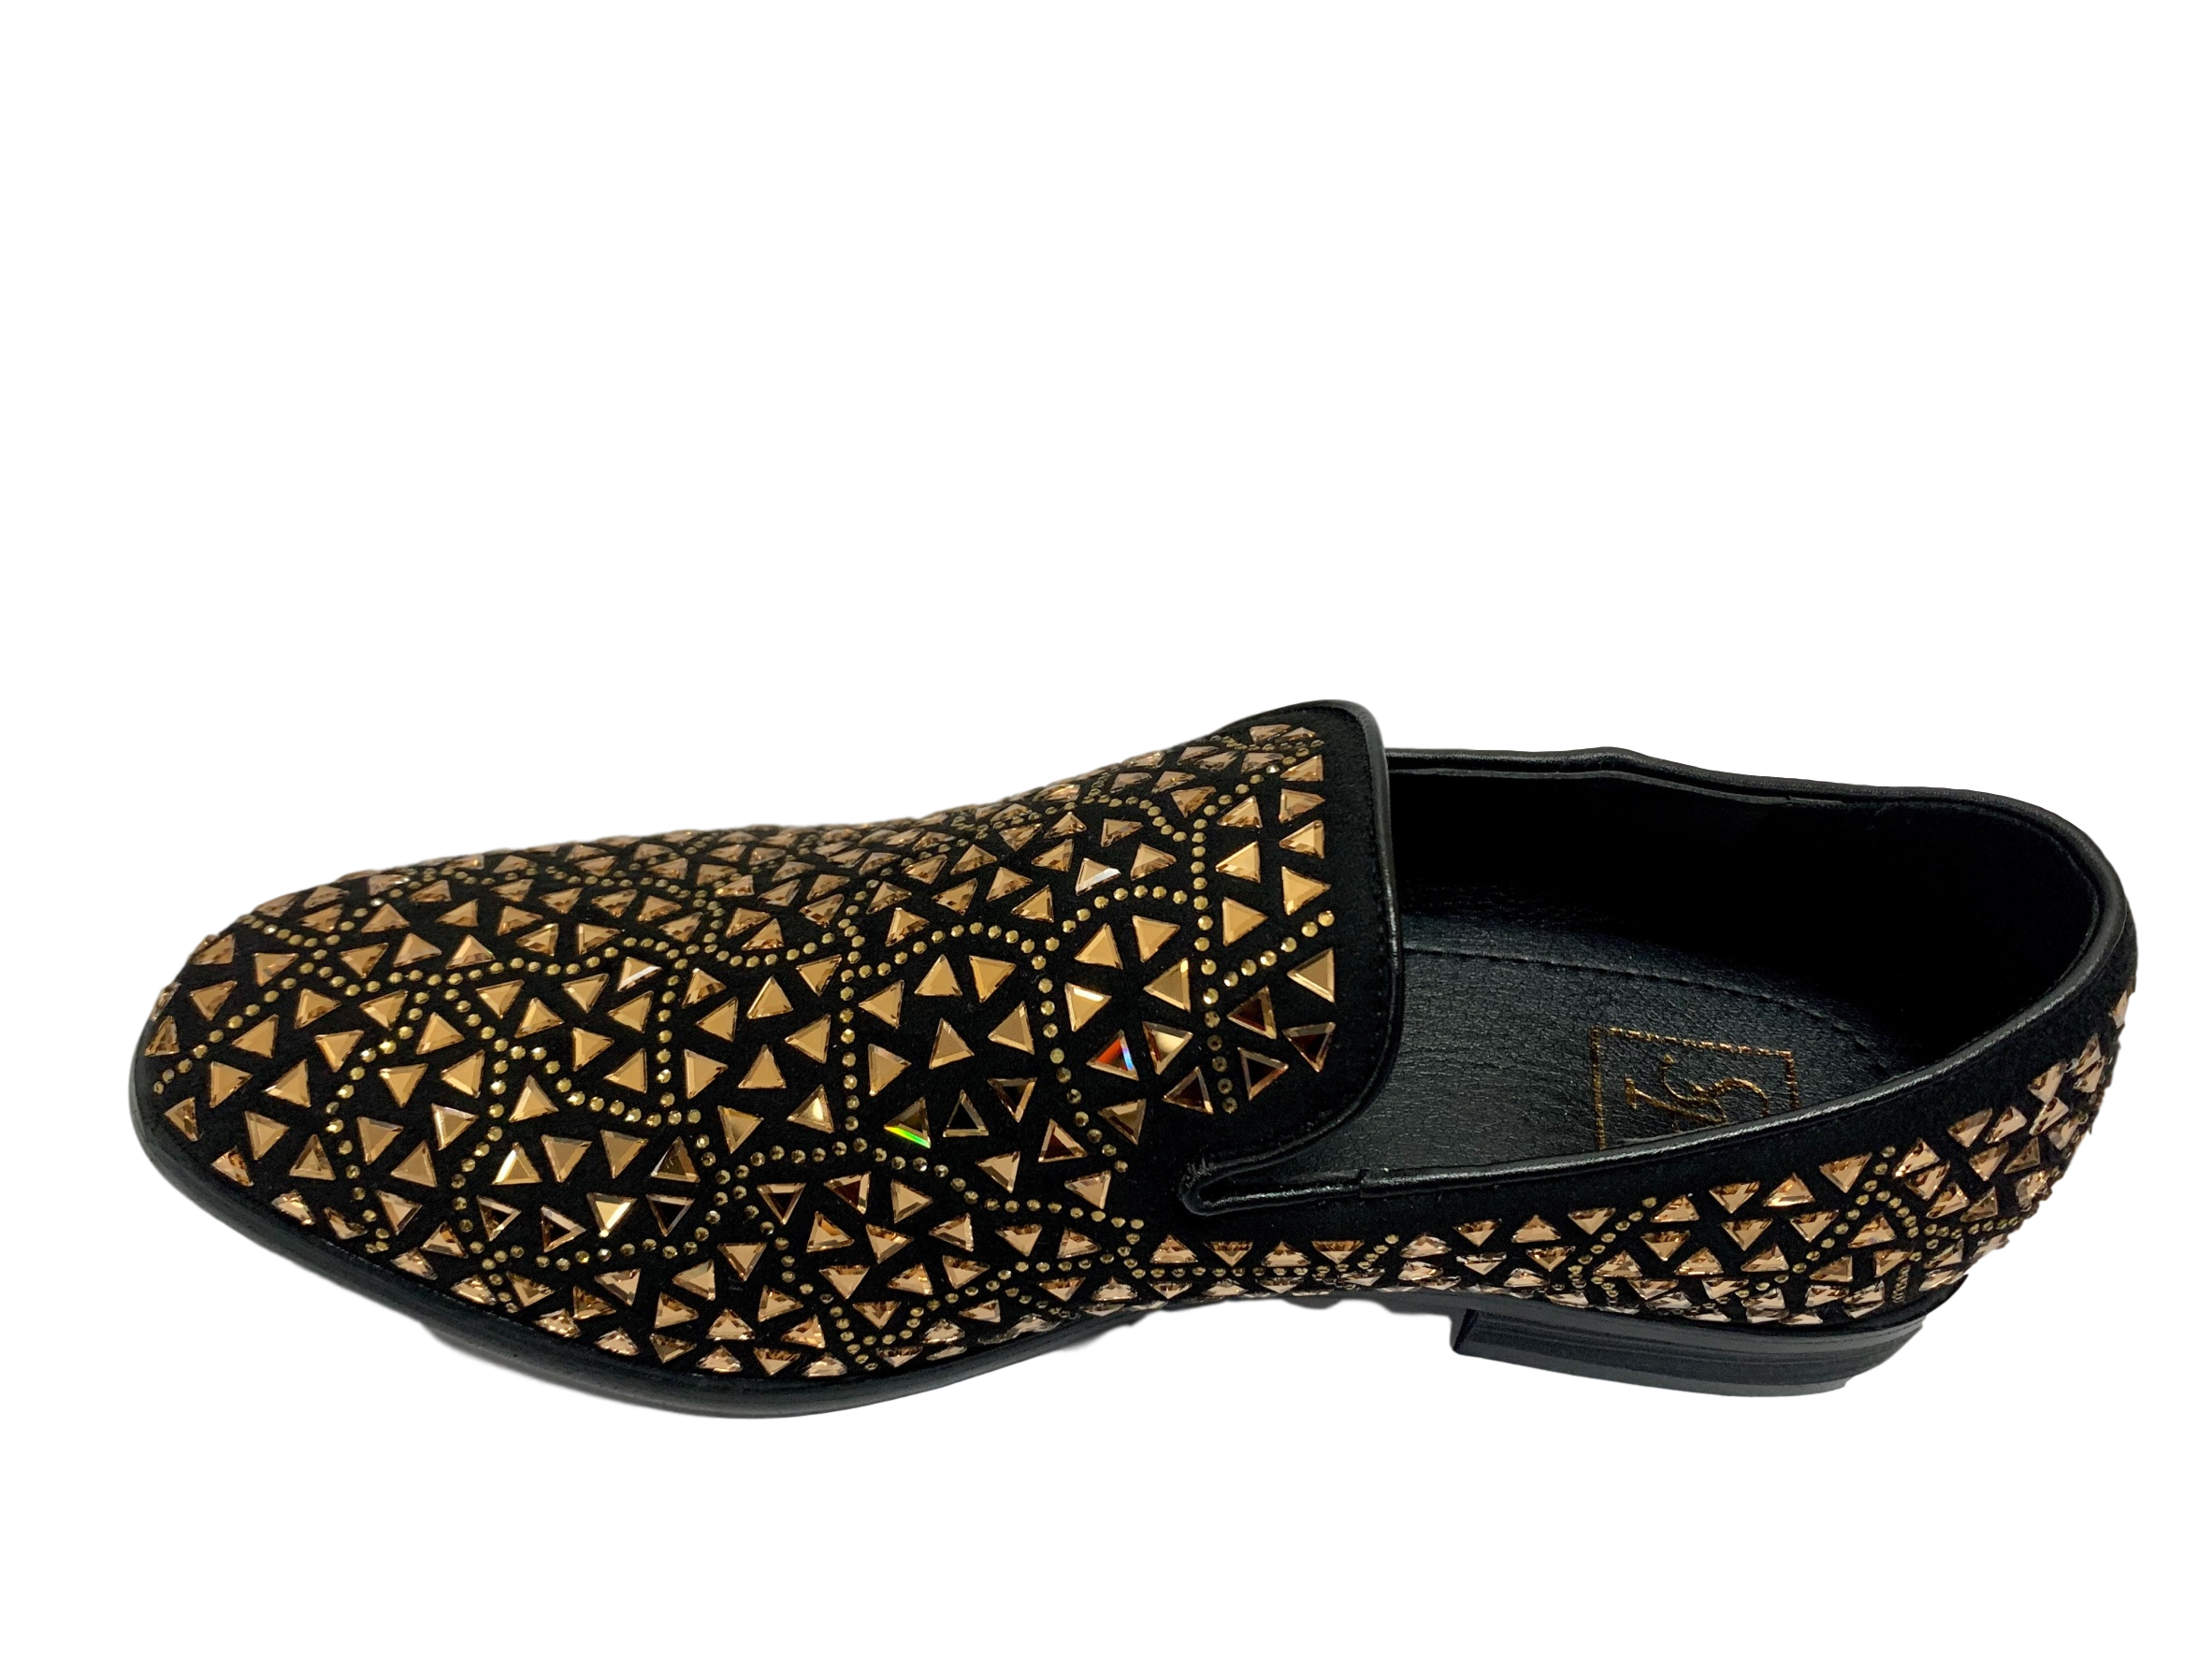 Sparko 27 Gold Rhinestone shoes – On 